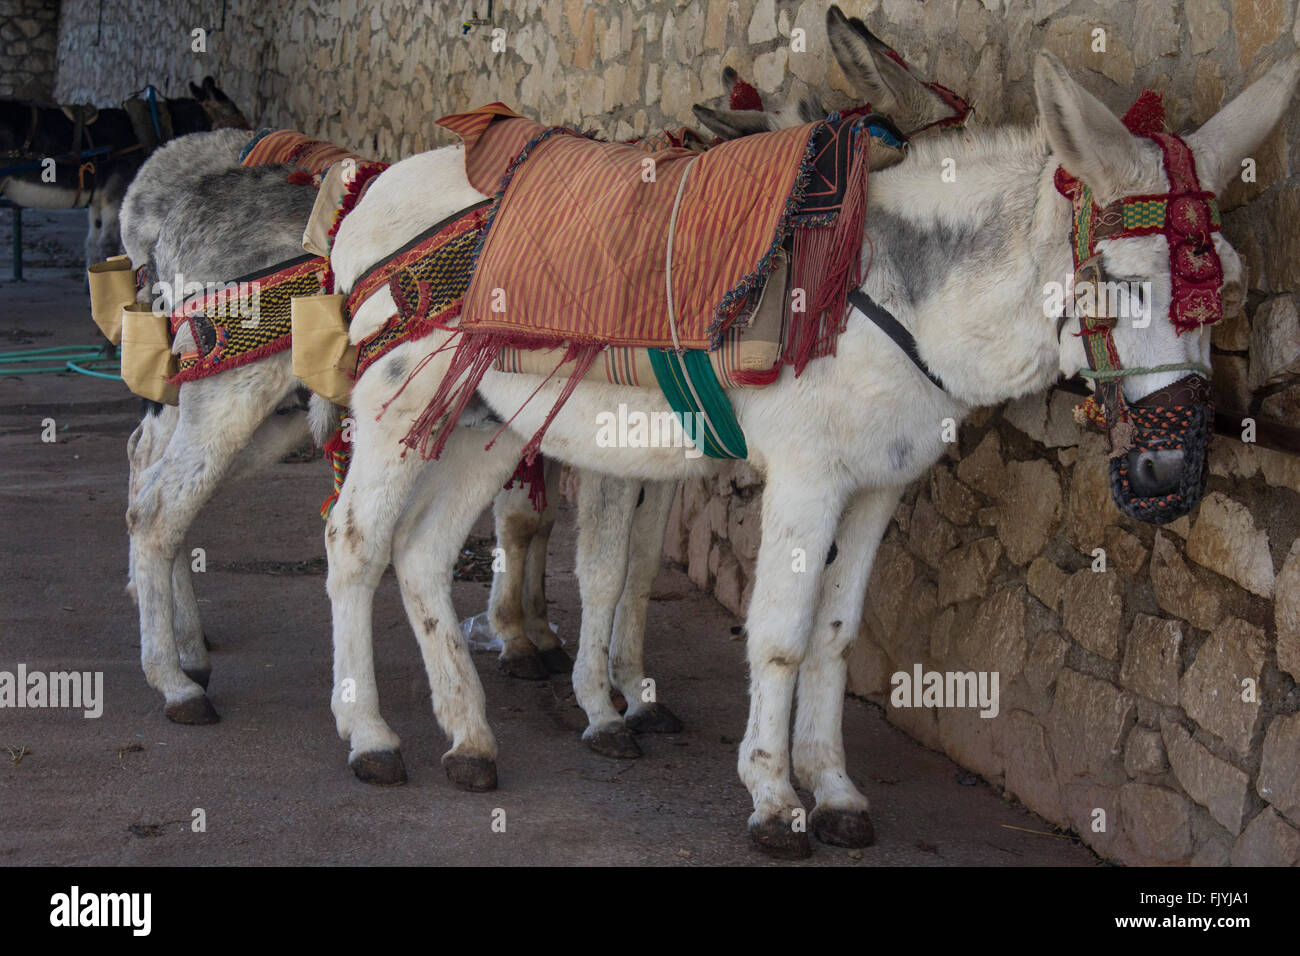 Burro taxi (donkey rides), Mijas, Costa del Sol, Stock Photo